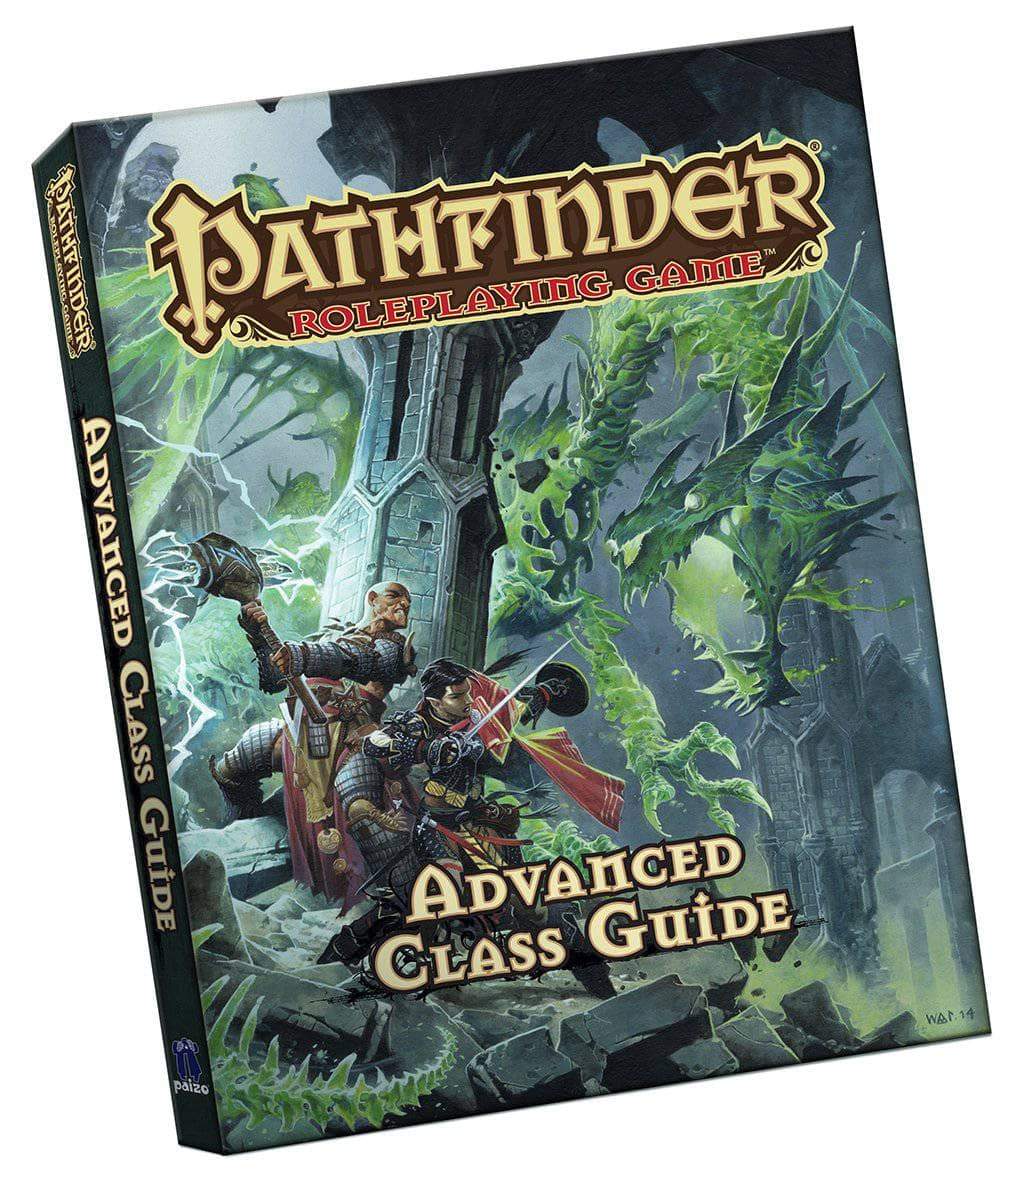 Pathfinder: Roolipeli -peli: Advanced Class Guide Pocket -versio (vähittäiskaupan painos)